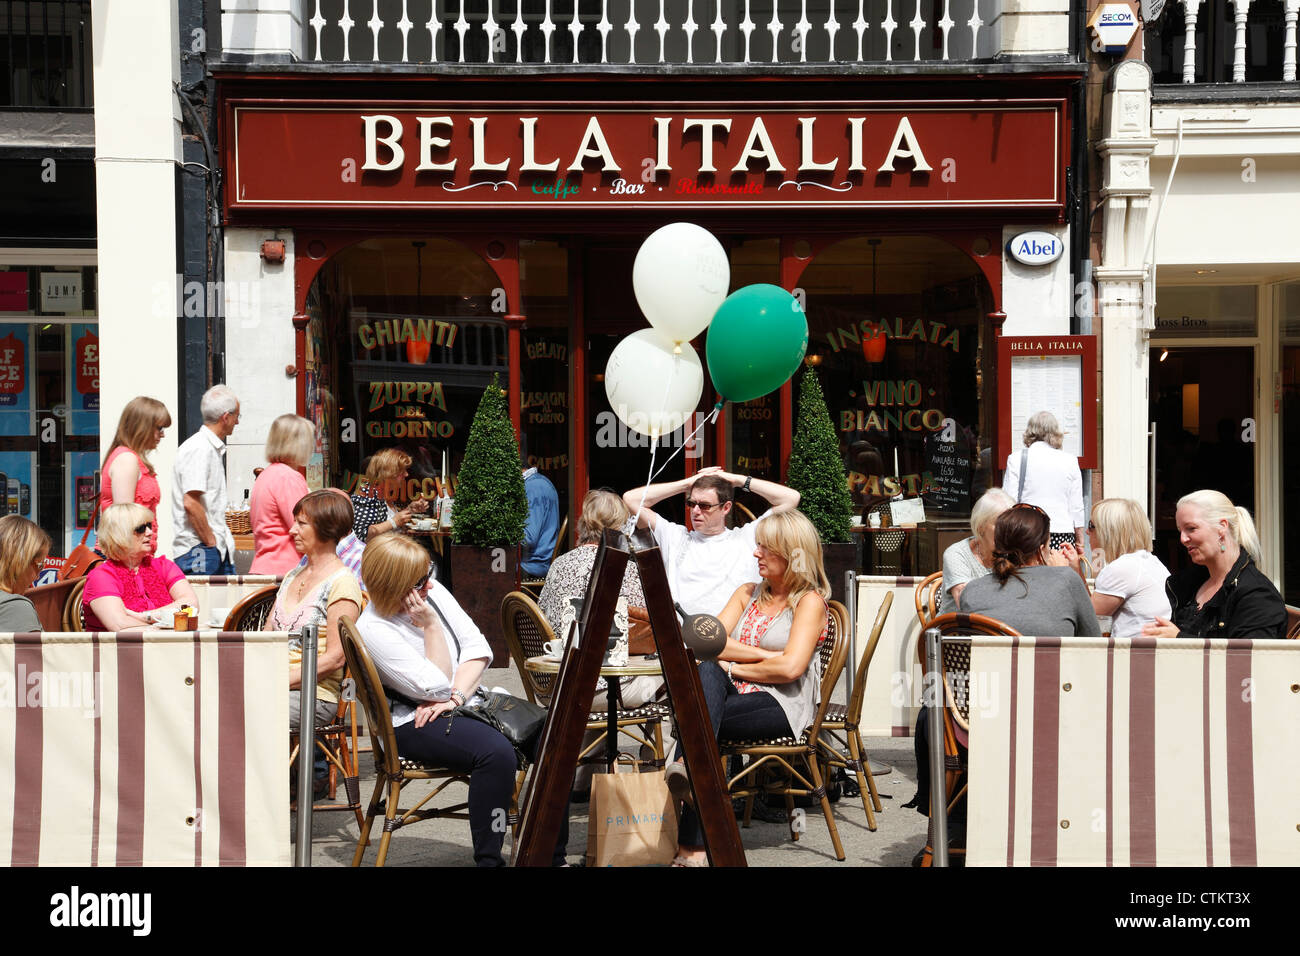 A Bella Italia restaurant in Chester, England, U.K. Stock Photo